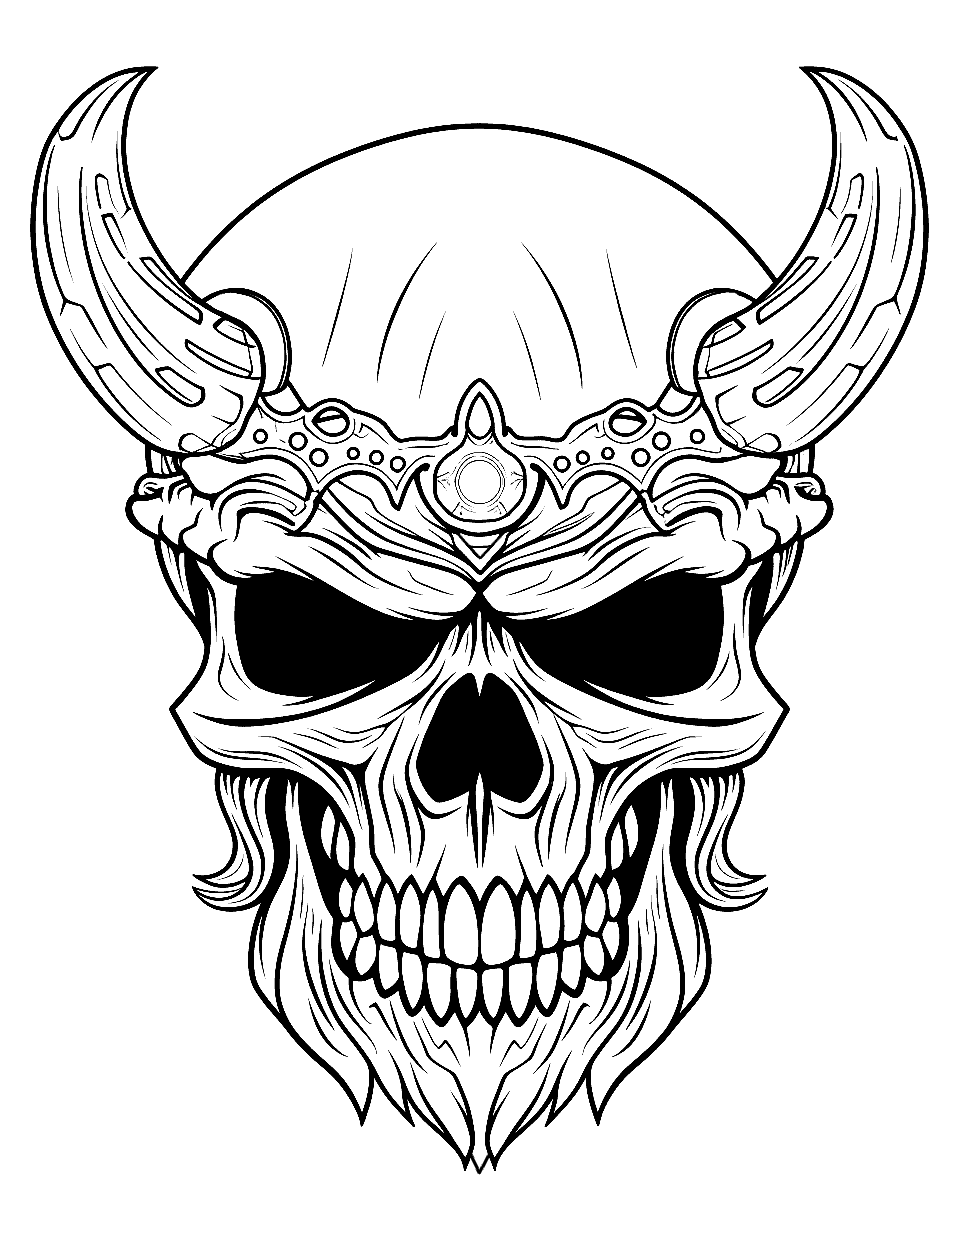 Viking Warrior Skull Coloring Page - A skull wearing a Viking crown, evoking Norse mythology.